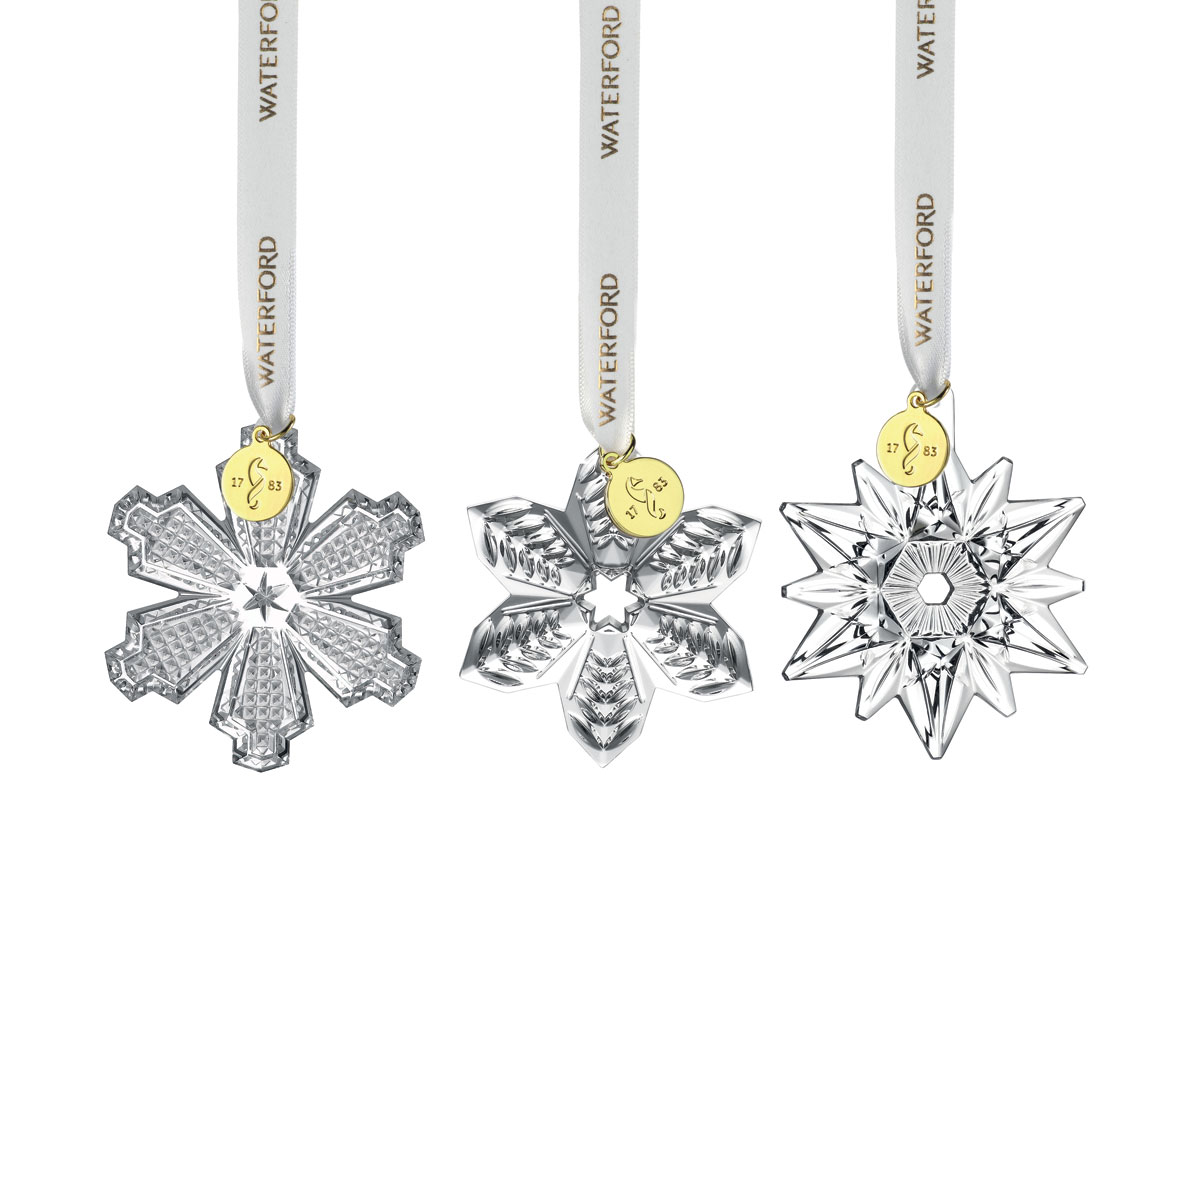 Waterford Crystal 2021 Mini Ornaments Set of Three